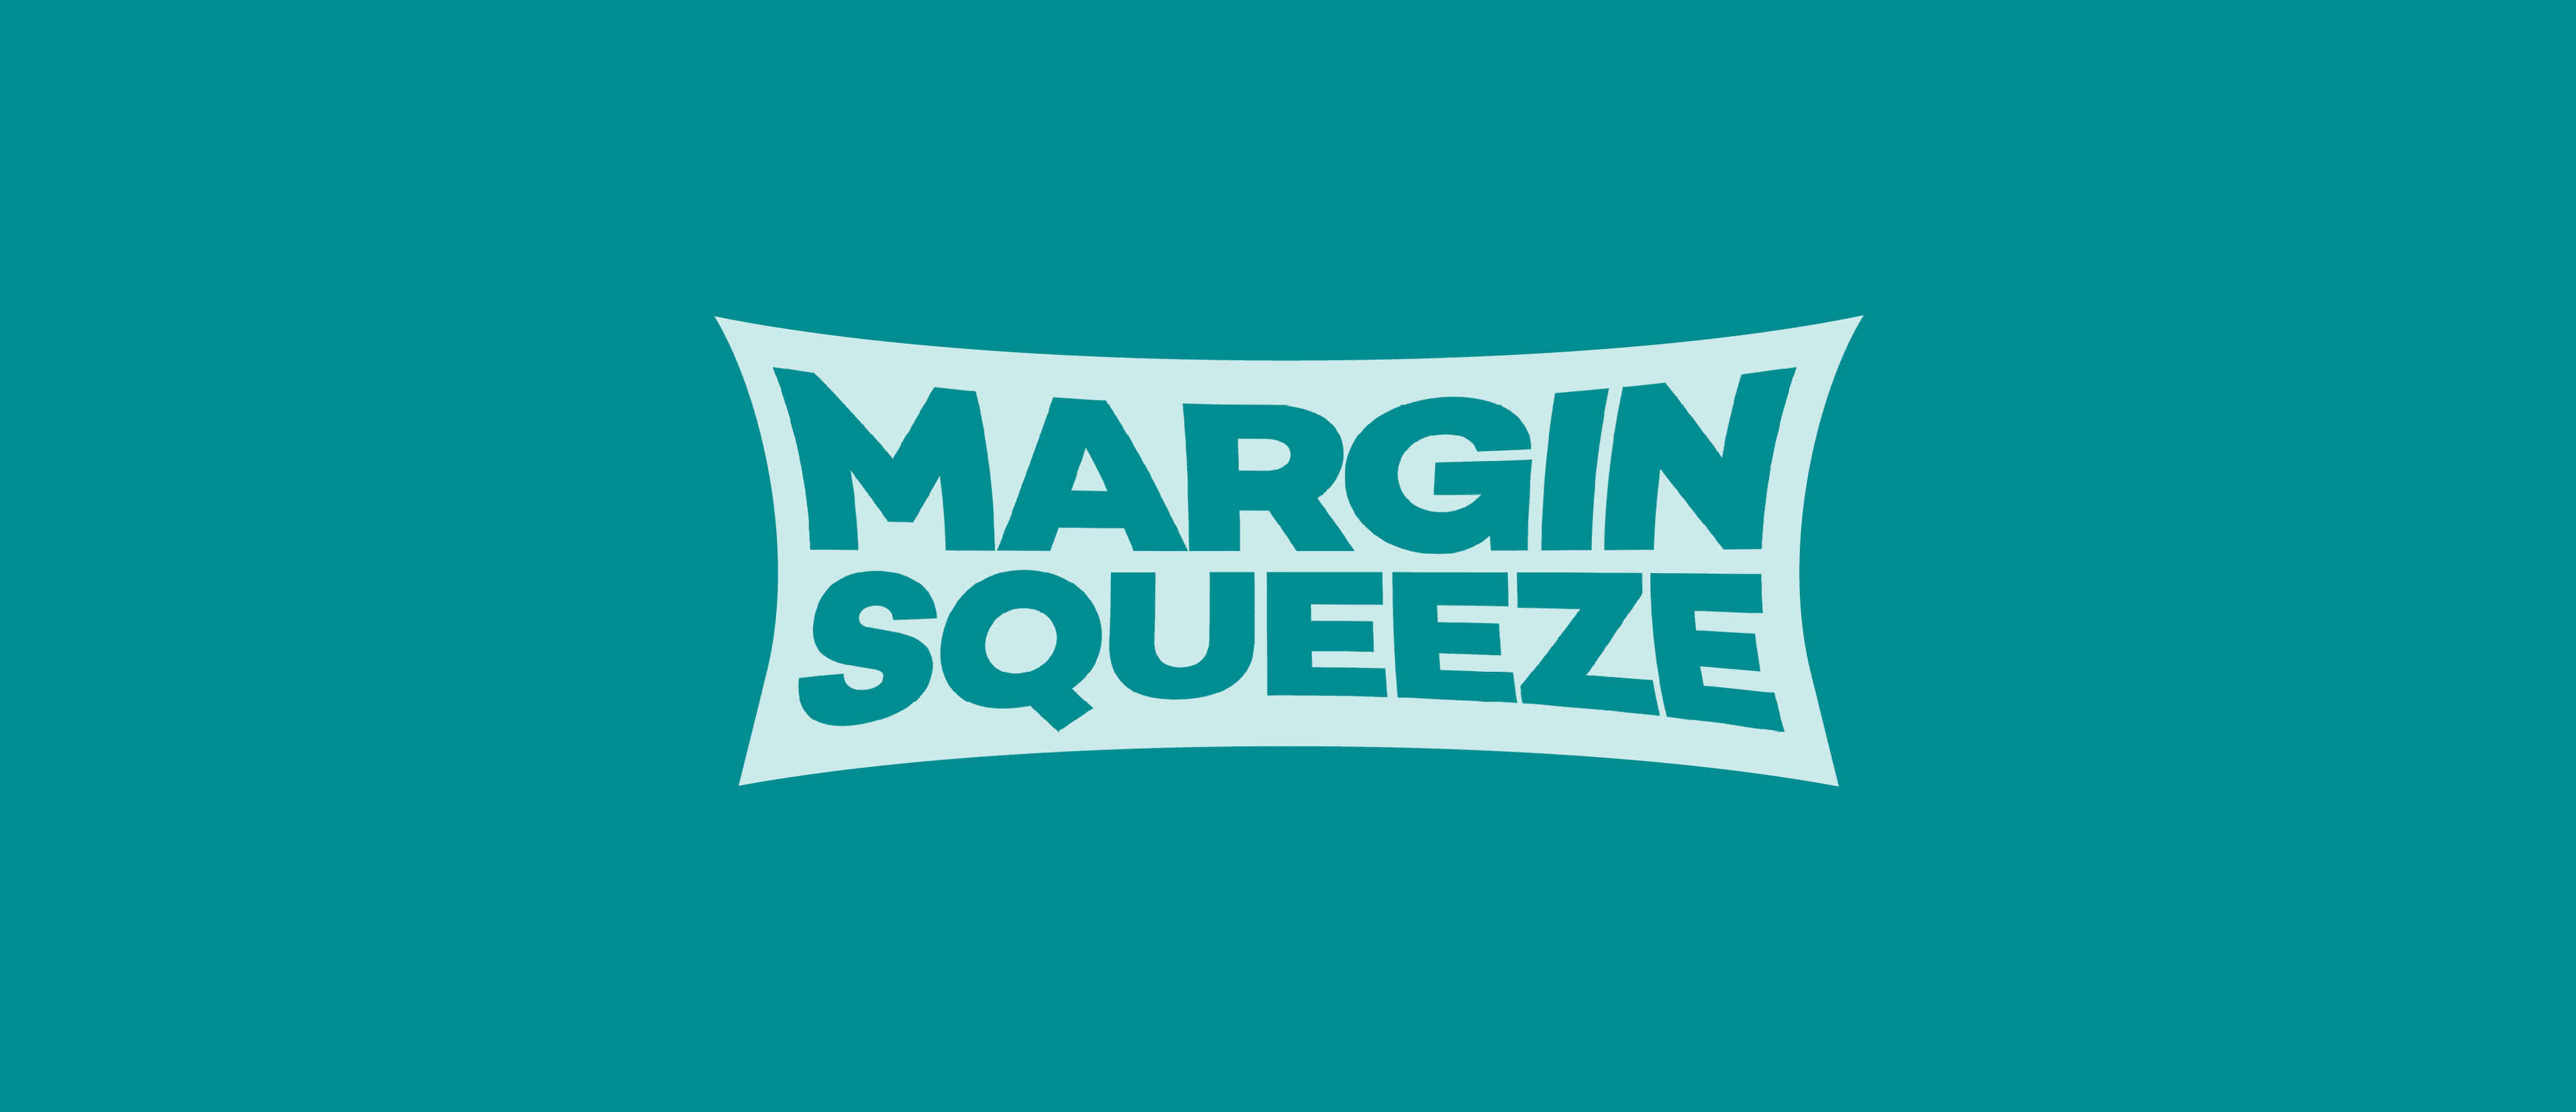 margin squeeze